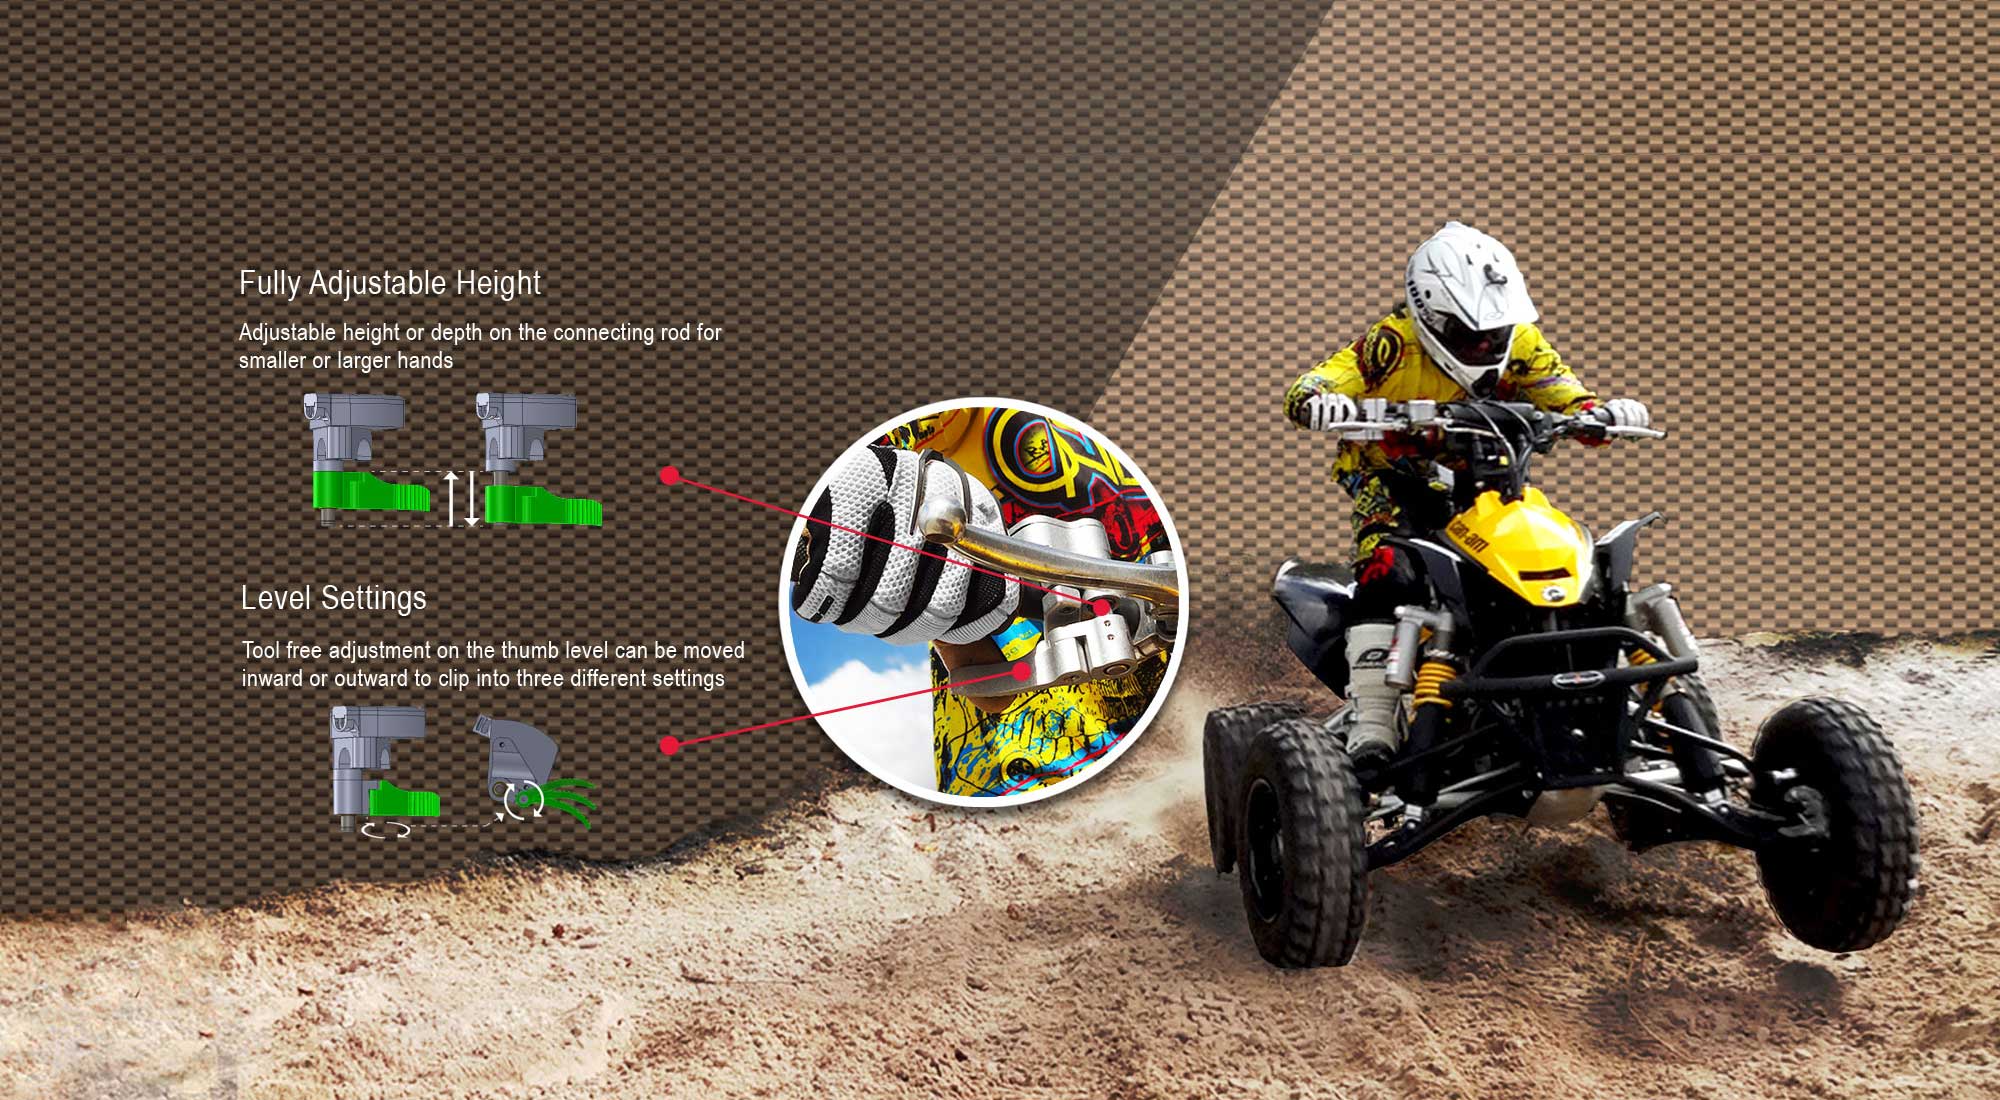 The World’s Most Advanced Thumb Throttle. Fully Adjustable ATV Throttle. Enjoy Your ATV without any fatigue! URMOSI THUMB THROTTLES